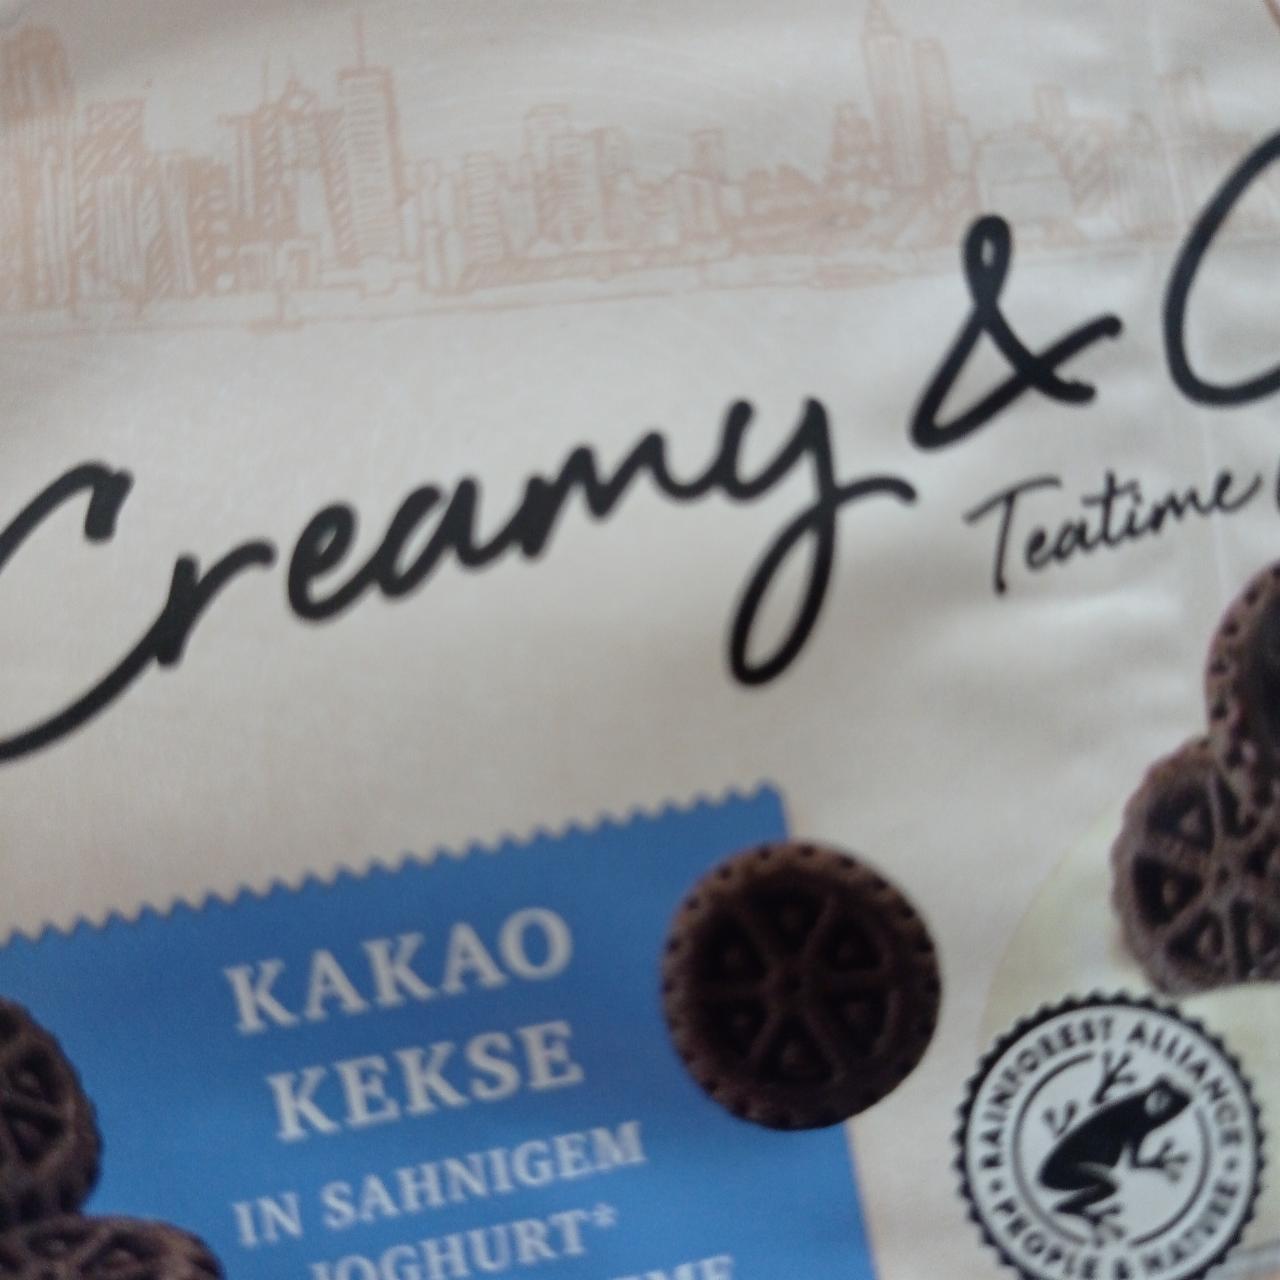 Fotografie - Kakao Kekse in sahnigem joghurt Creamy & Crunch